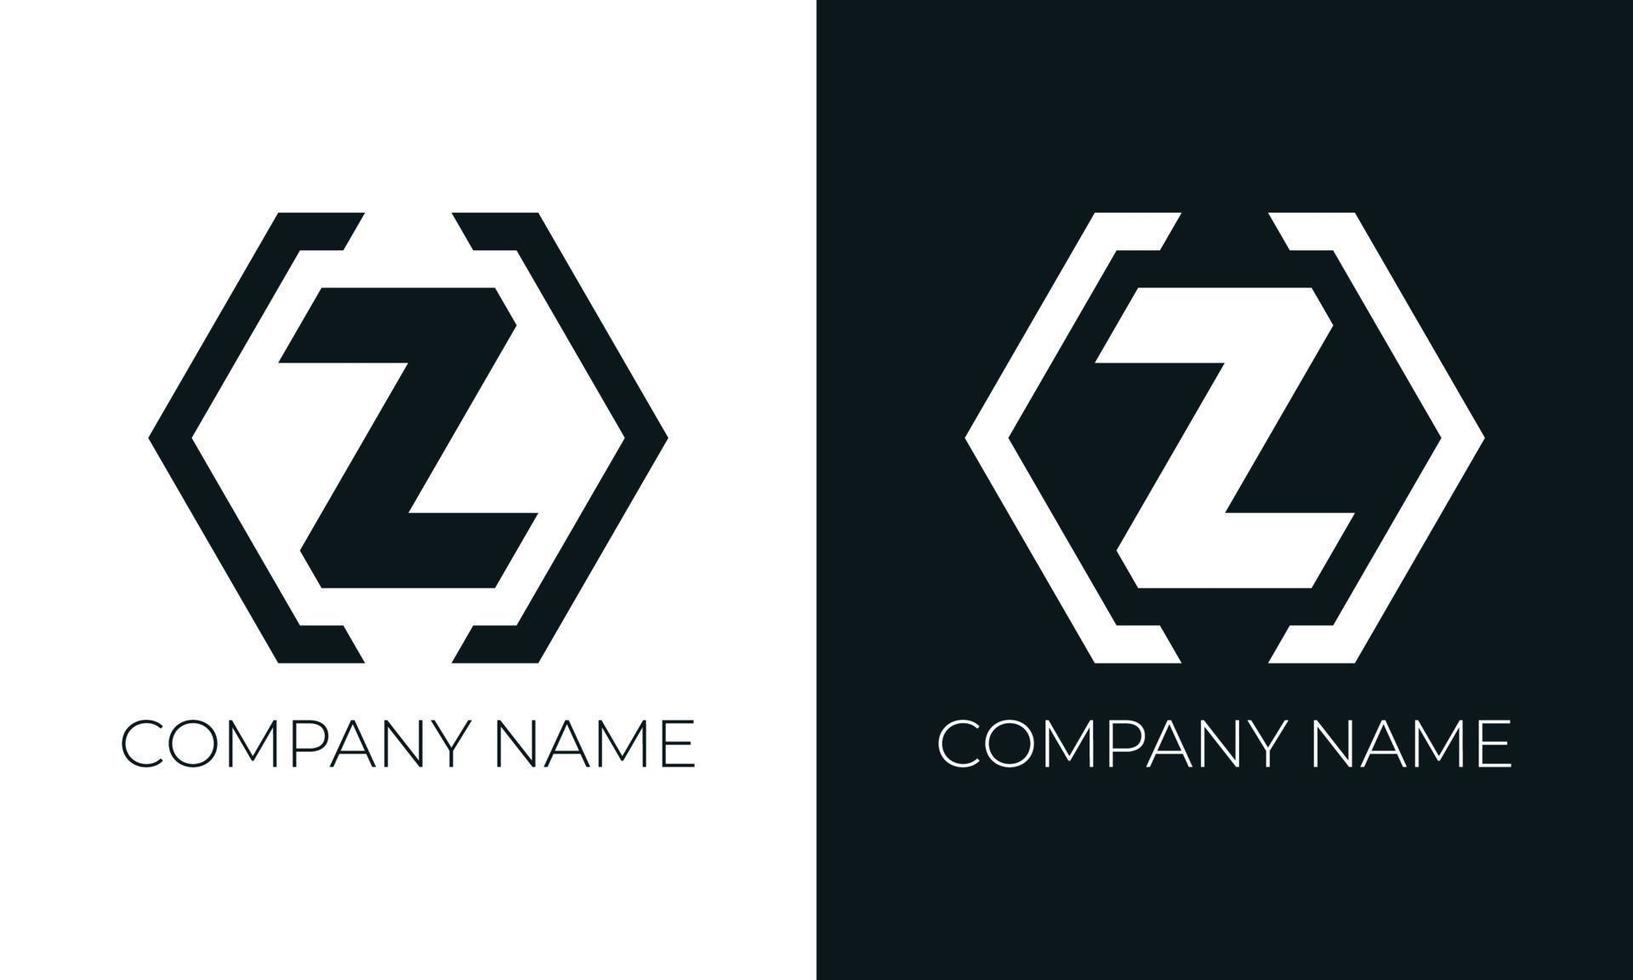 modelo de design de vetor de logotipo de letra inicial z. tipografia z na moda moderna criativa e cores pretas.